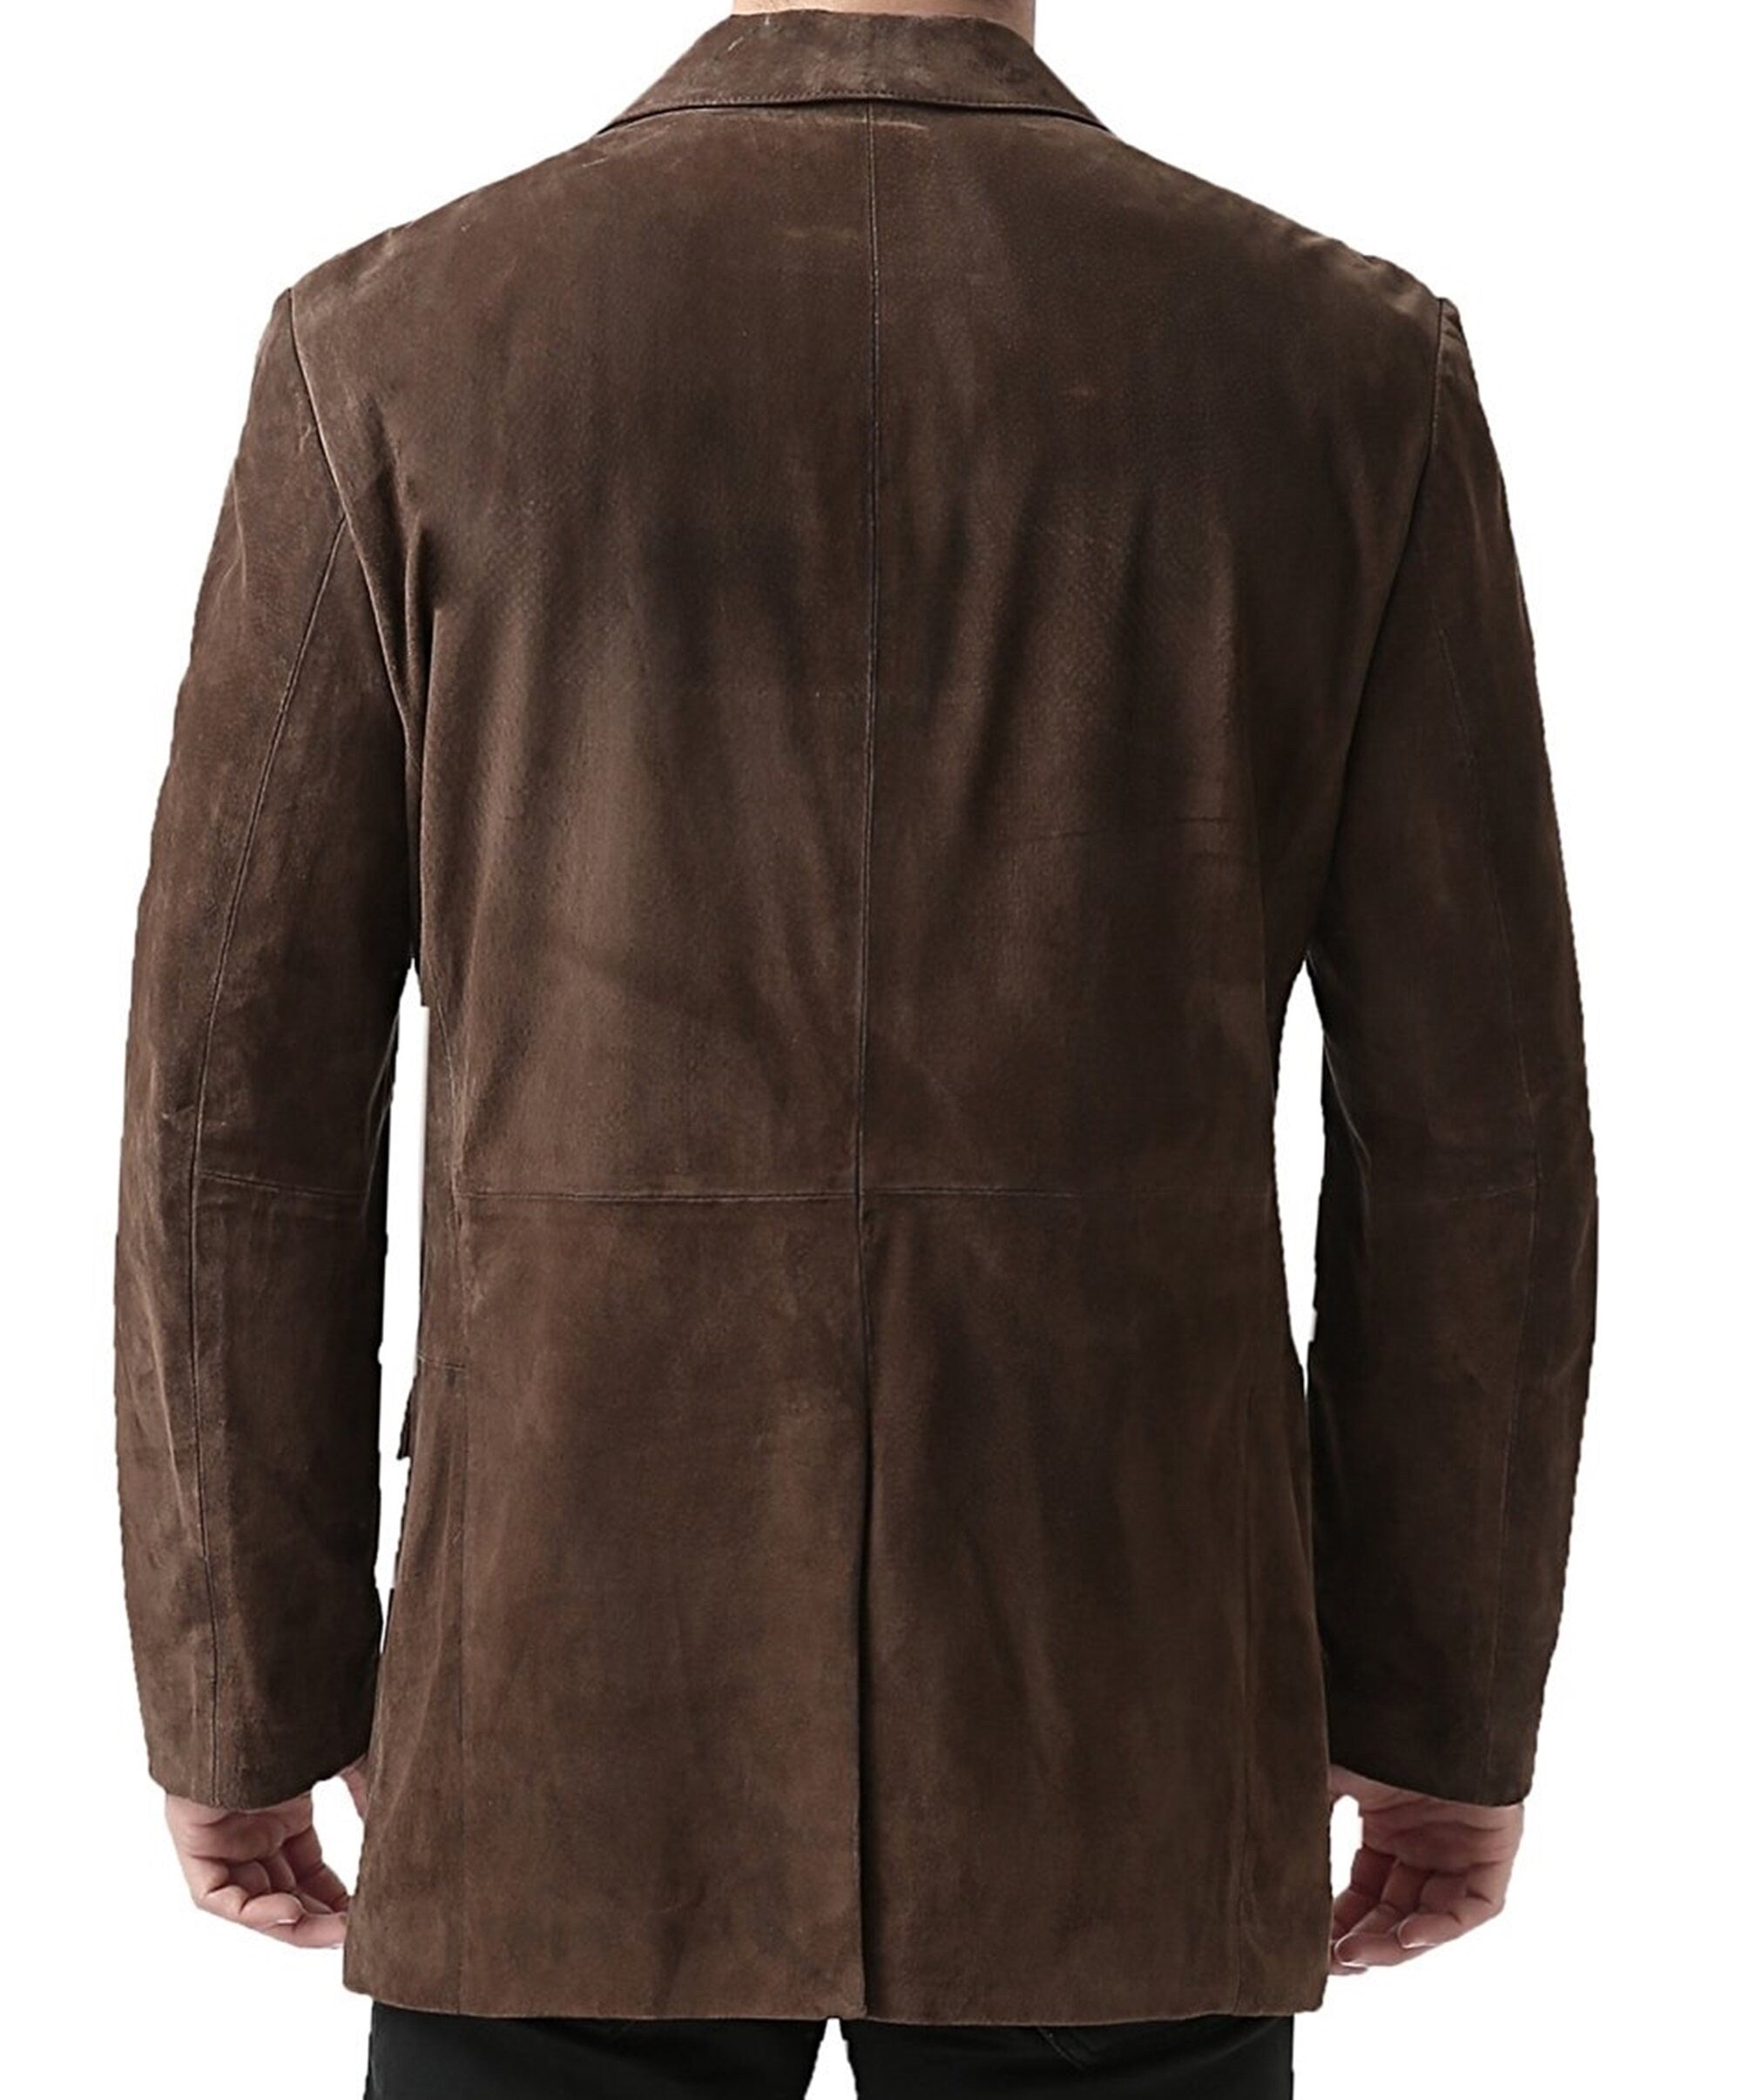 Brown Suede Leather Blazer Coat For Men